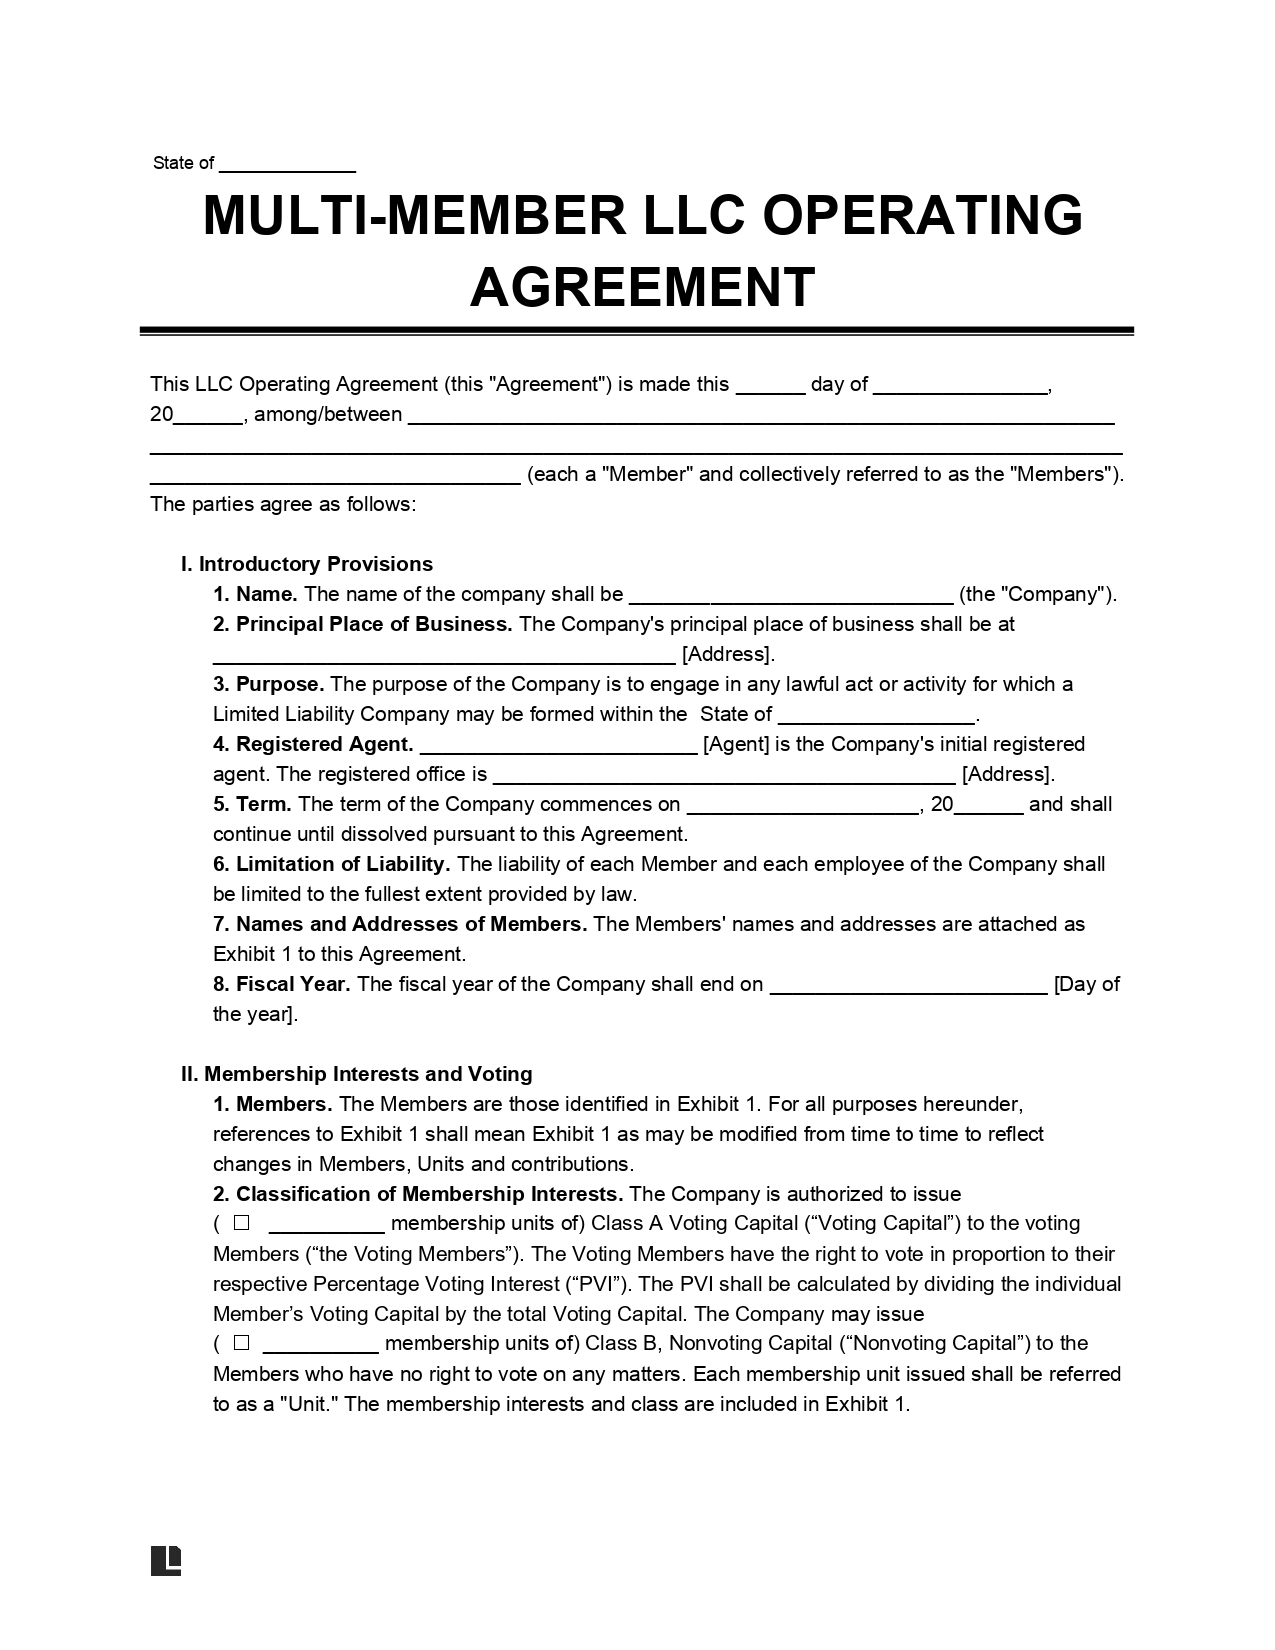 Multi-Member LLC Operating Agreement Form